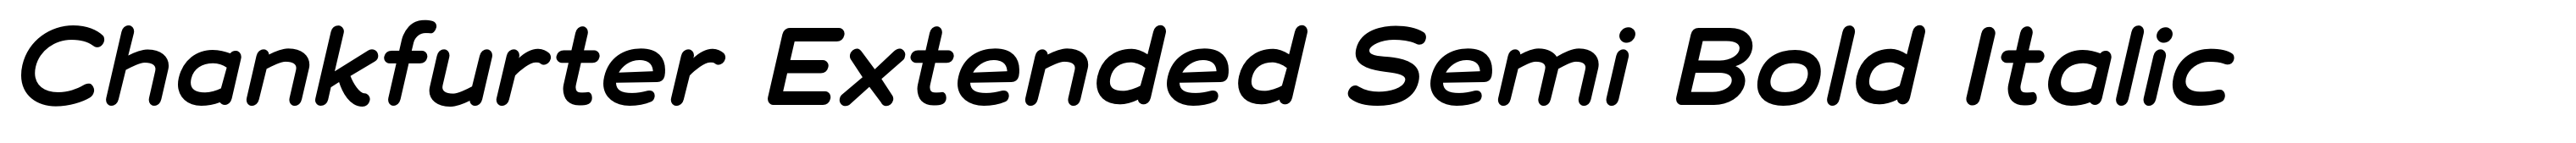 Chankfurter Extended Semi Bold Italic